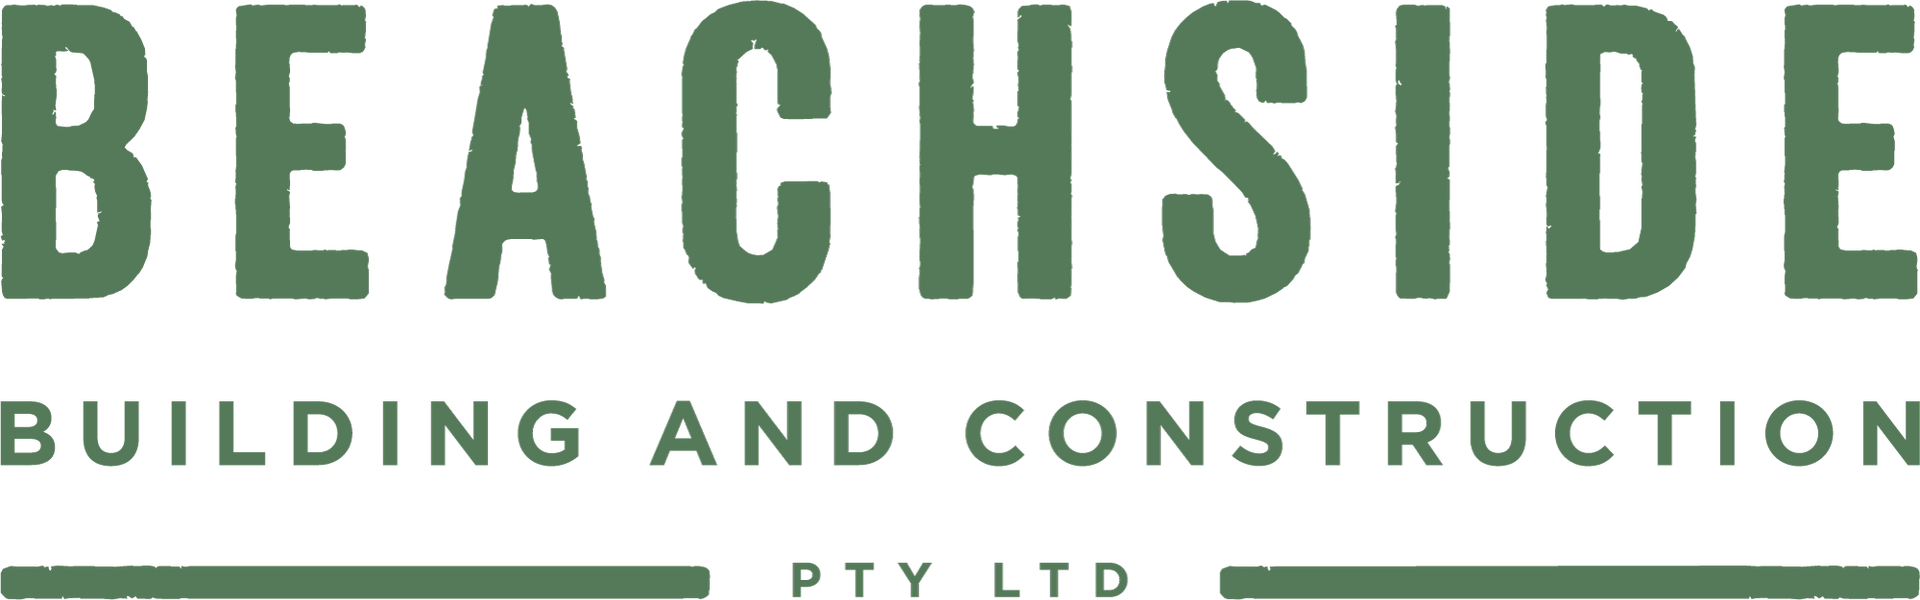 Beachside-Building-And-Construction-logo